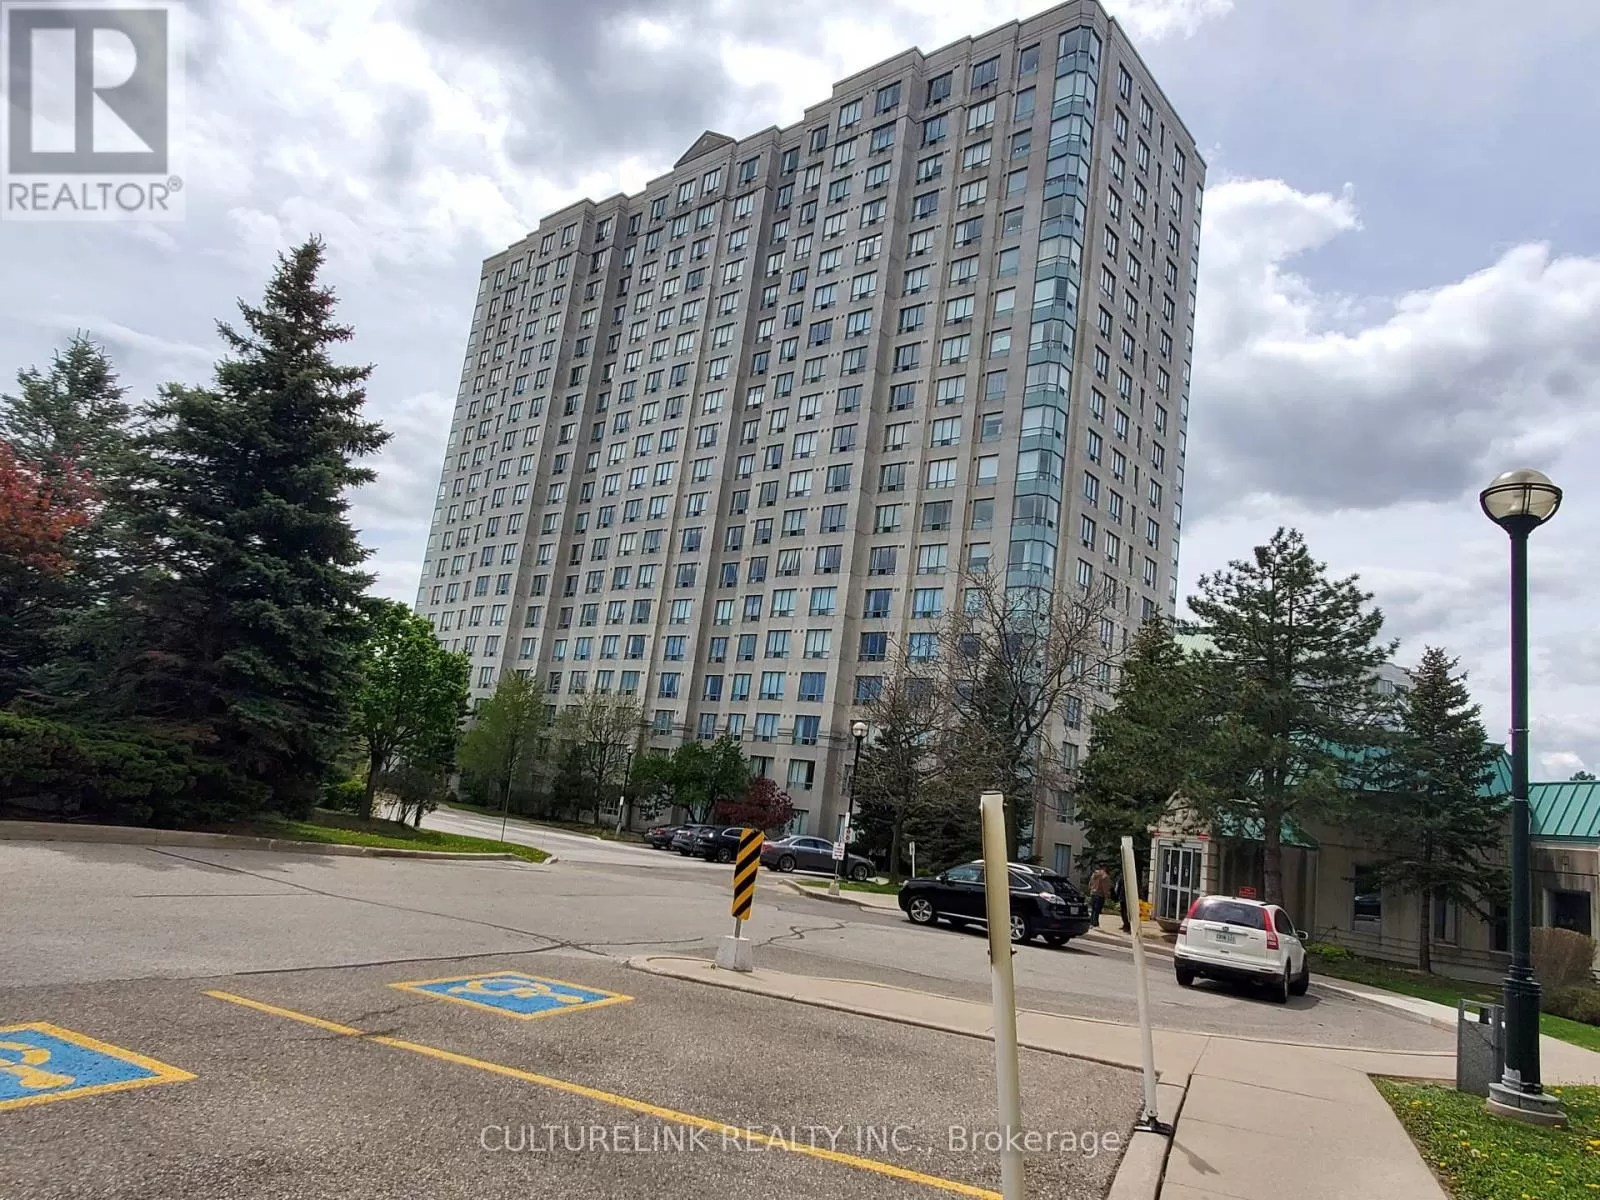 Apartment for rent: Lph19 - 2627 Mccowan Road, Toronto, Ontario M1S 5T1